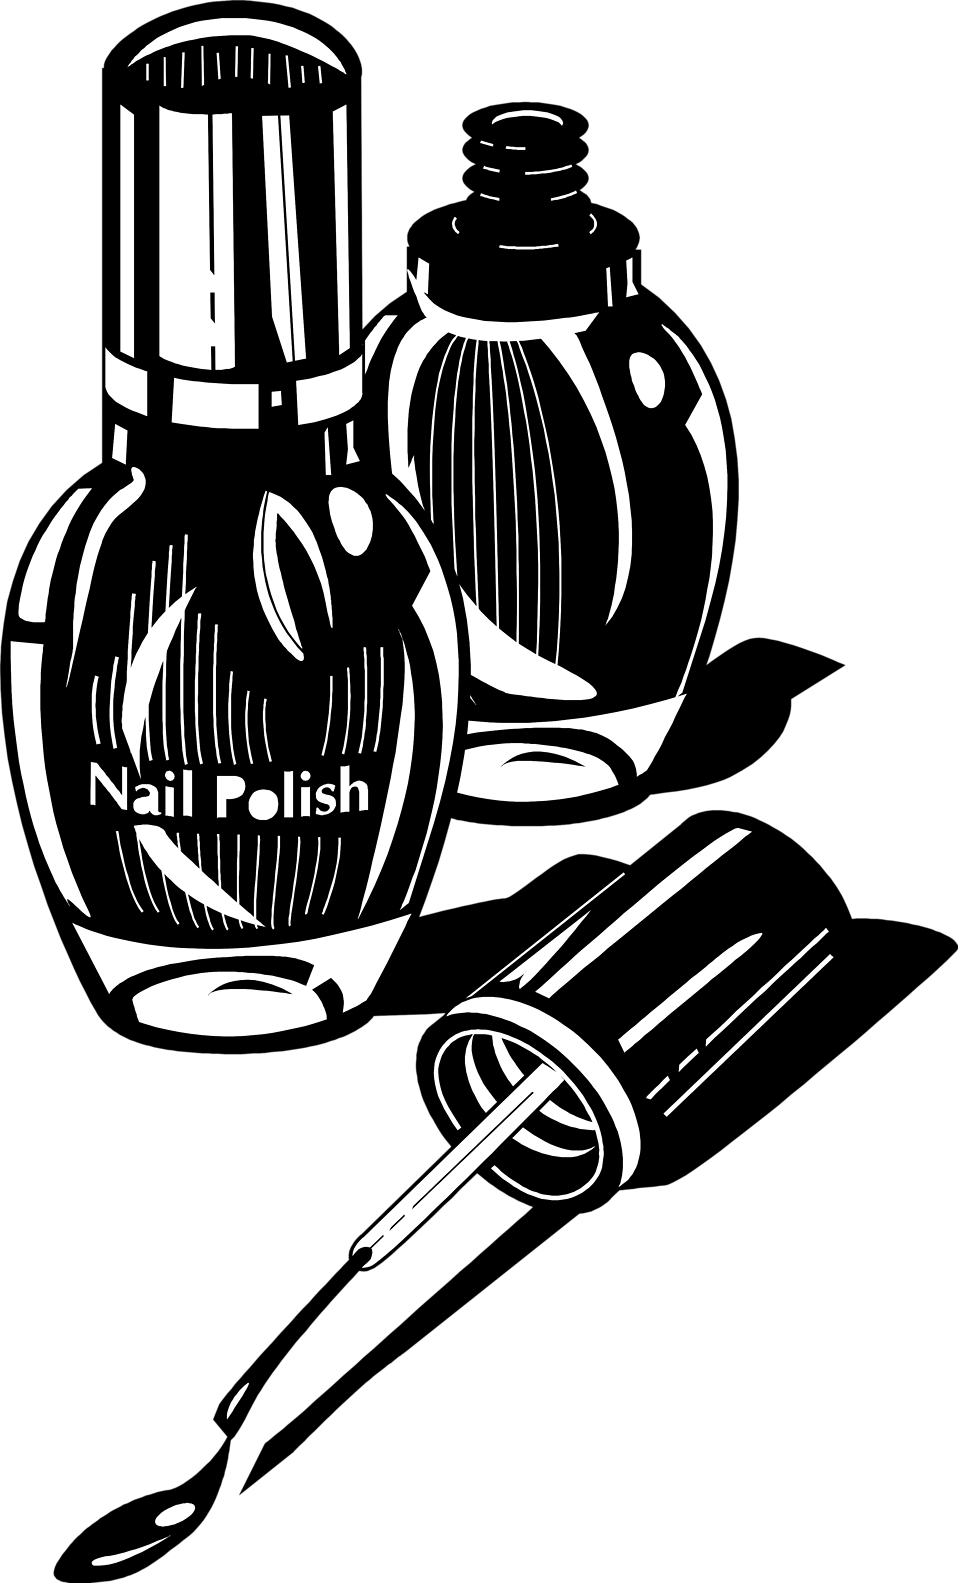 Nail Polish | Free Stock Photo | Illustration of nail polish bottles